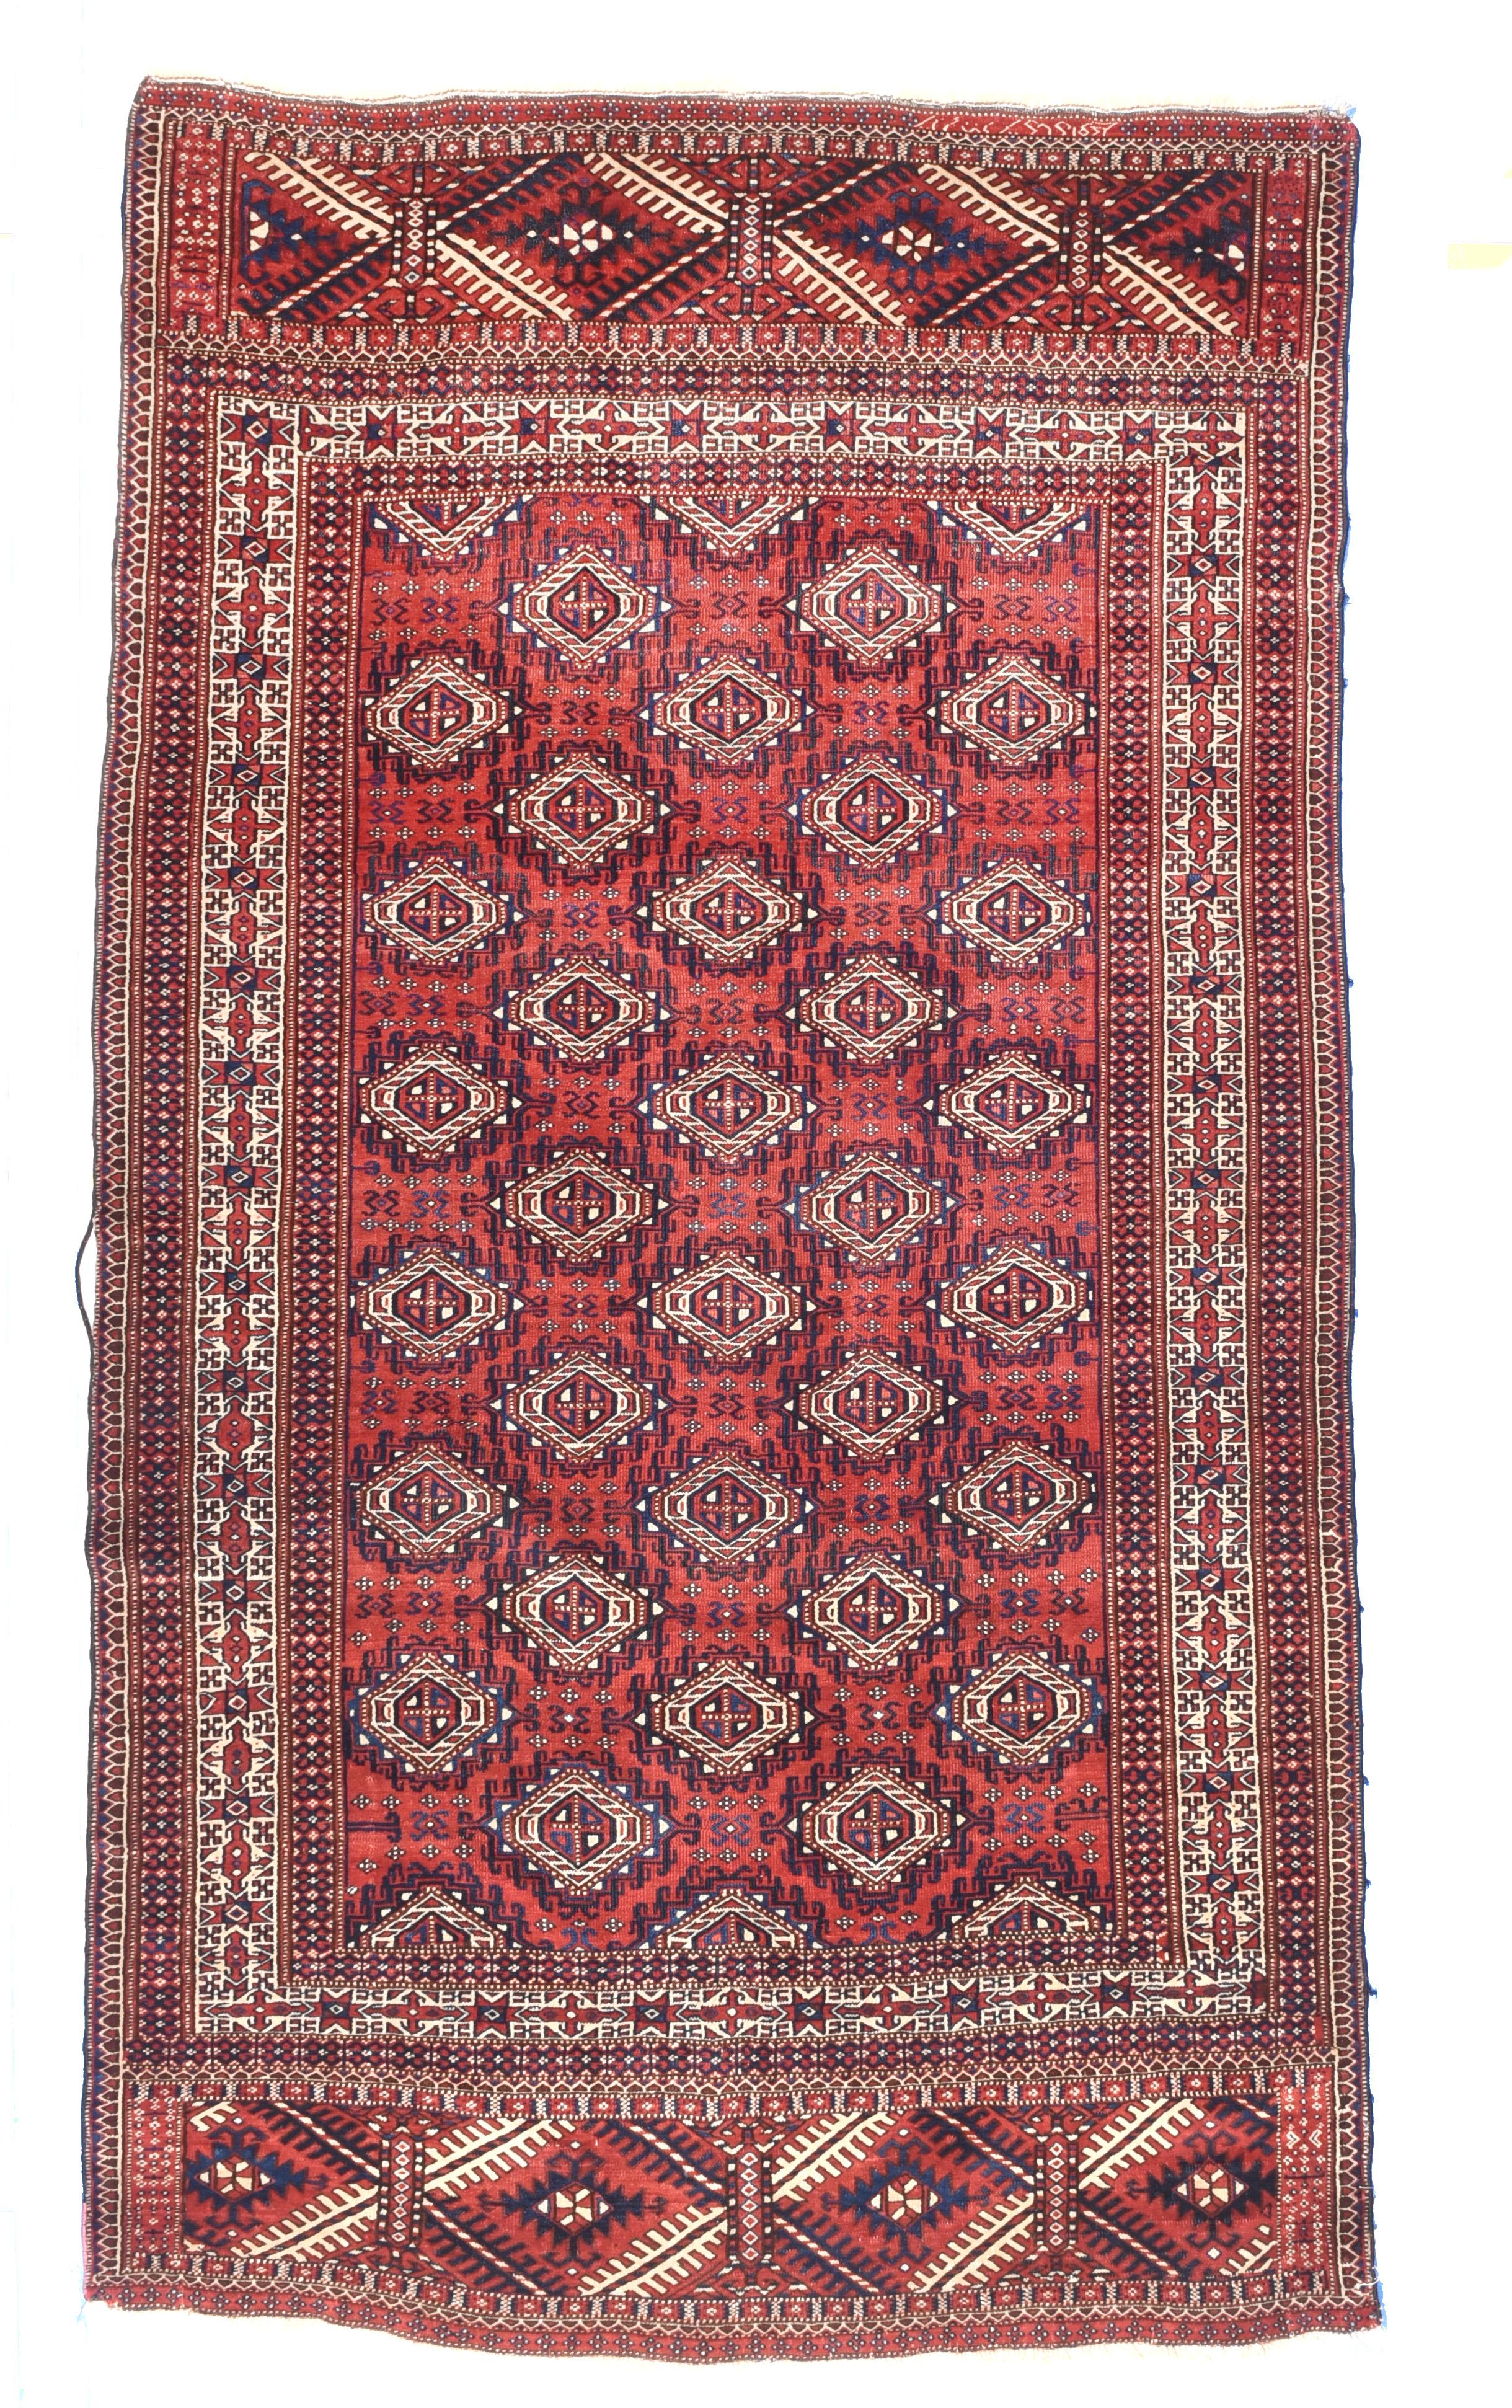 Russian Fine Antique Yomut 'Yomud' Russain Turkemanstan Rug, Bukhara Design, circa 1890